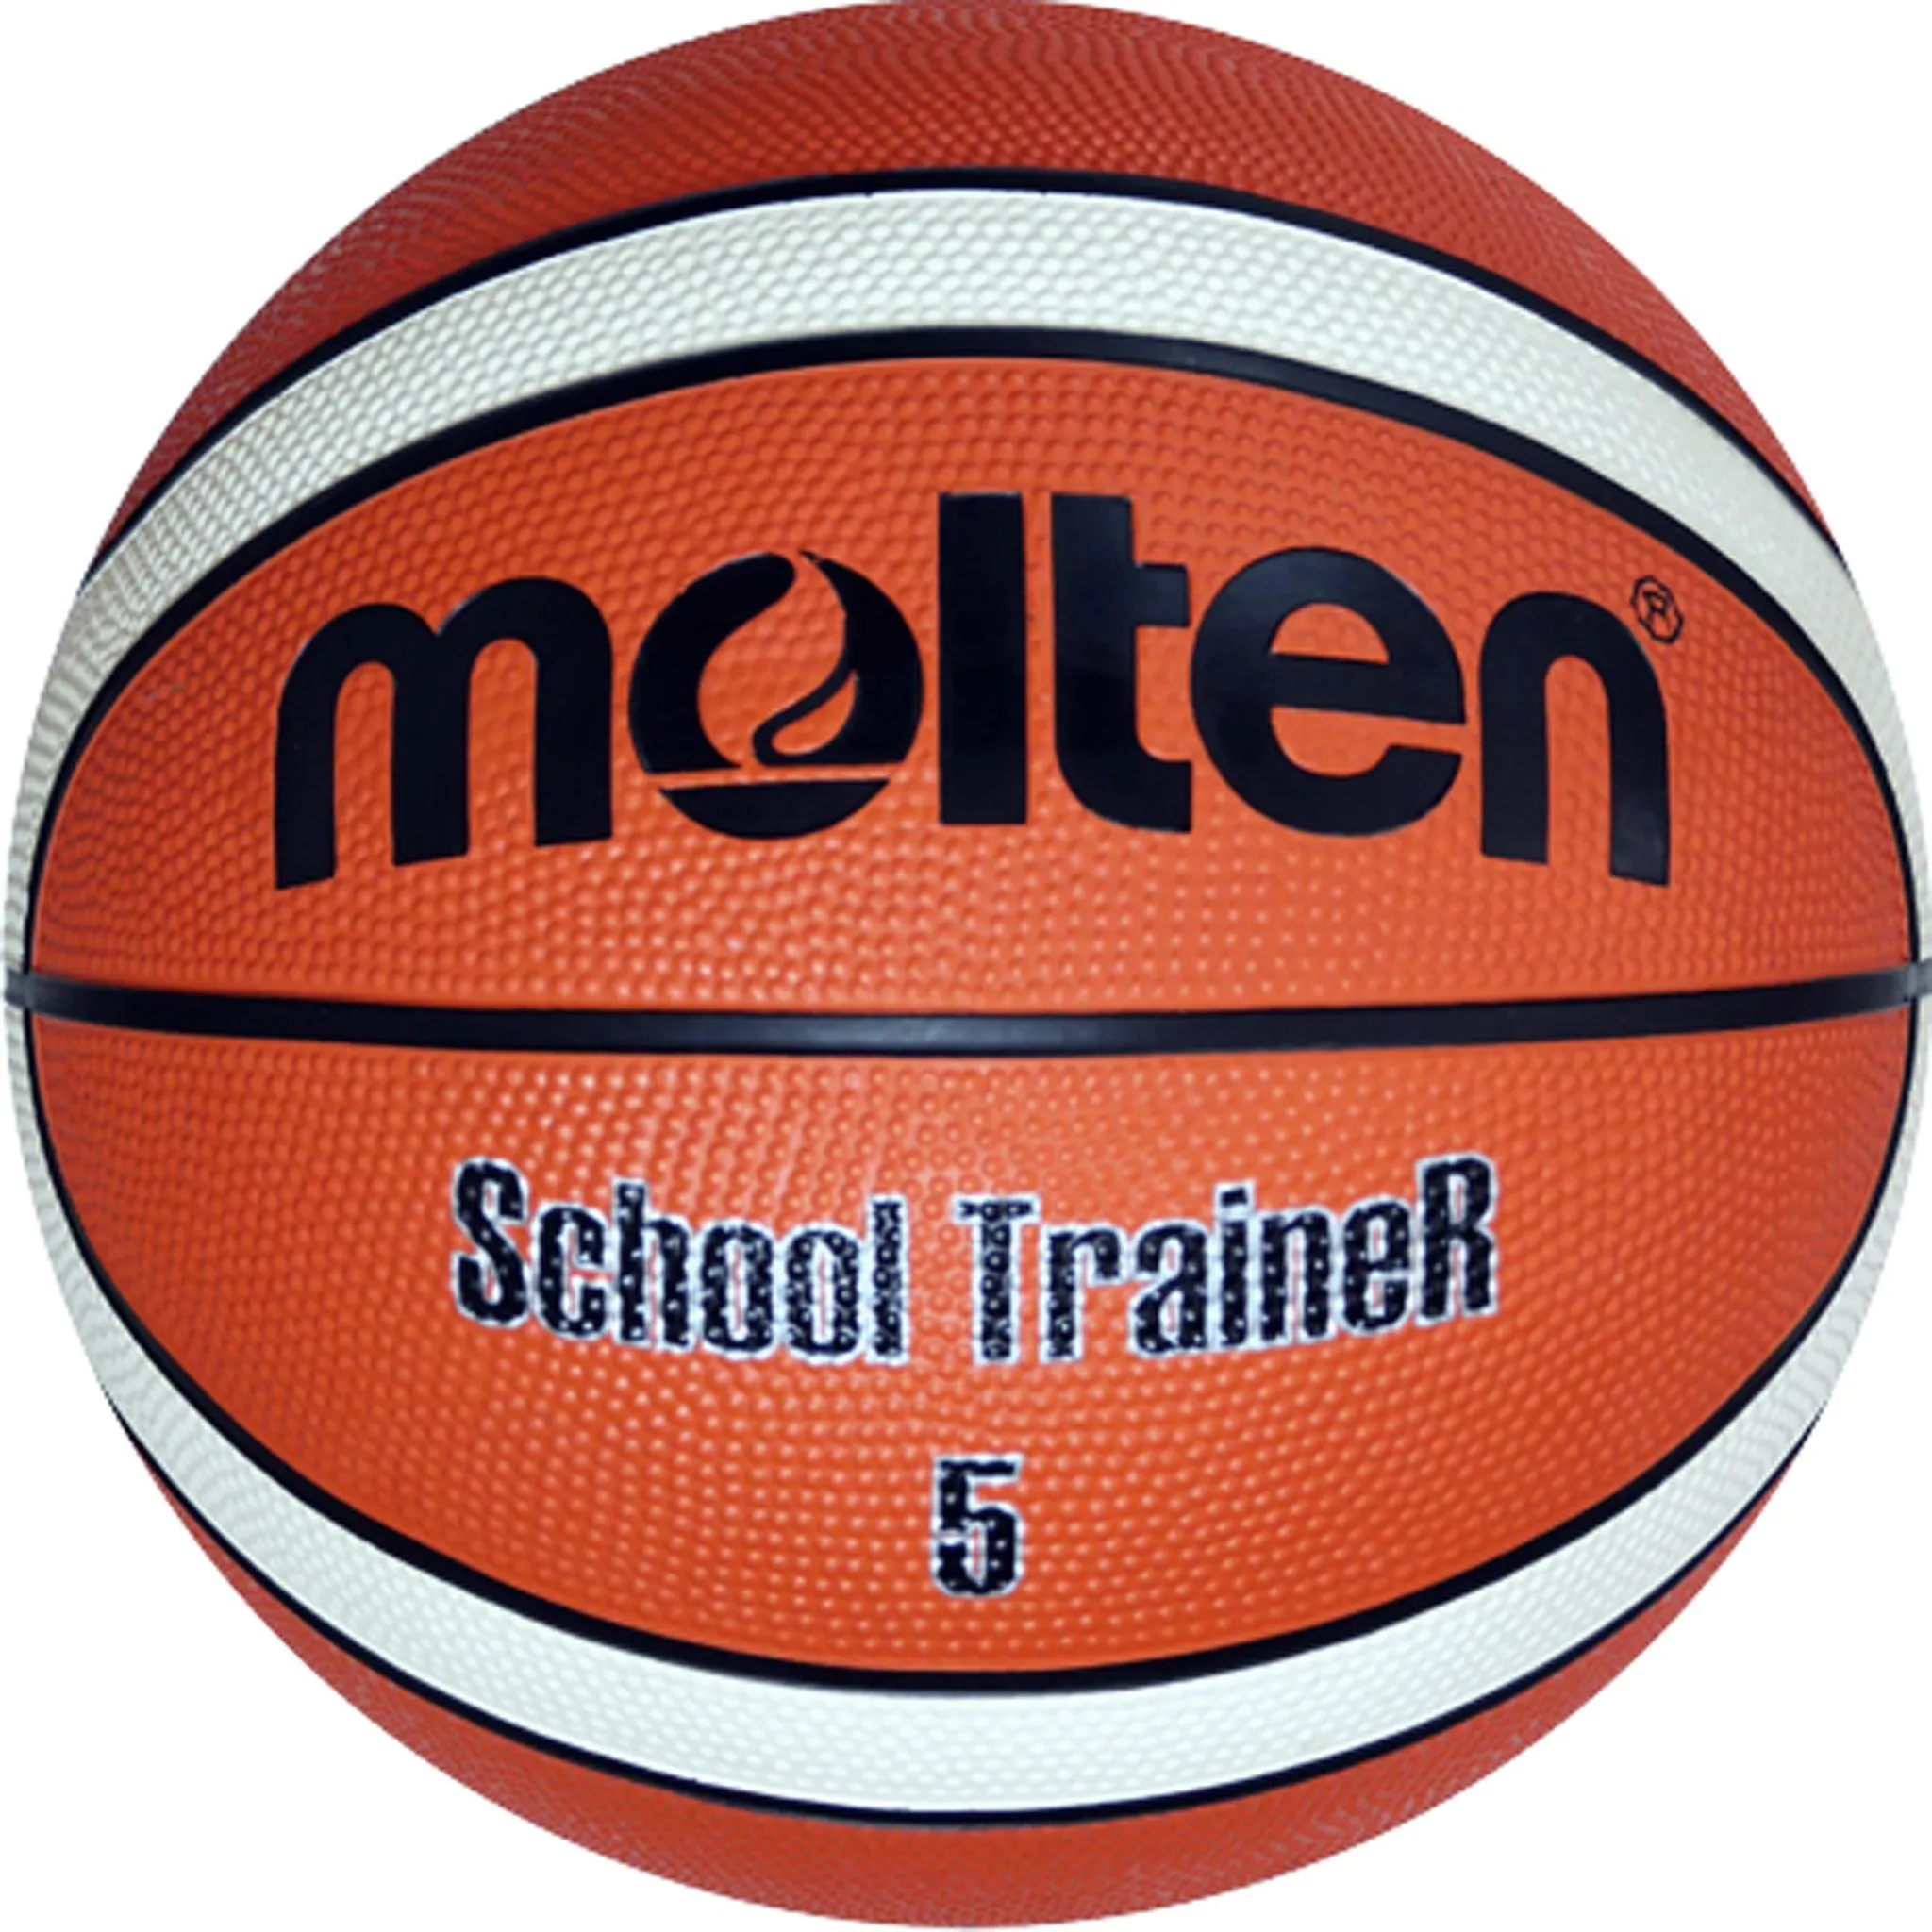 BG5-ST molten orange Basketball 5 Indoor/Outdoor Gr. SchoolTraineR